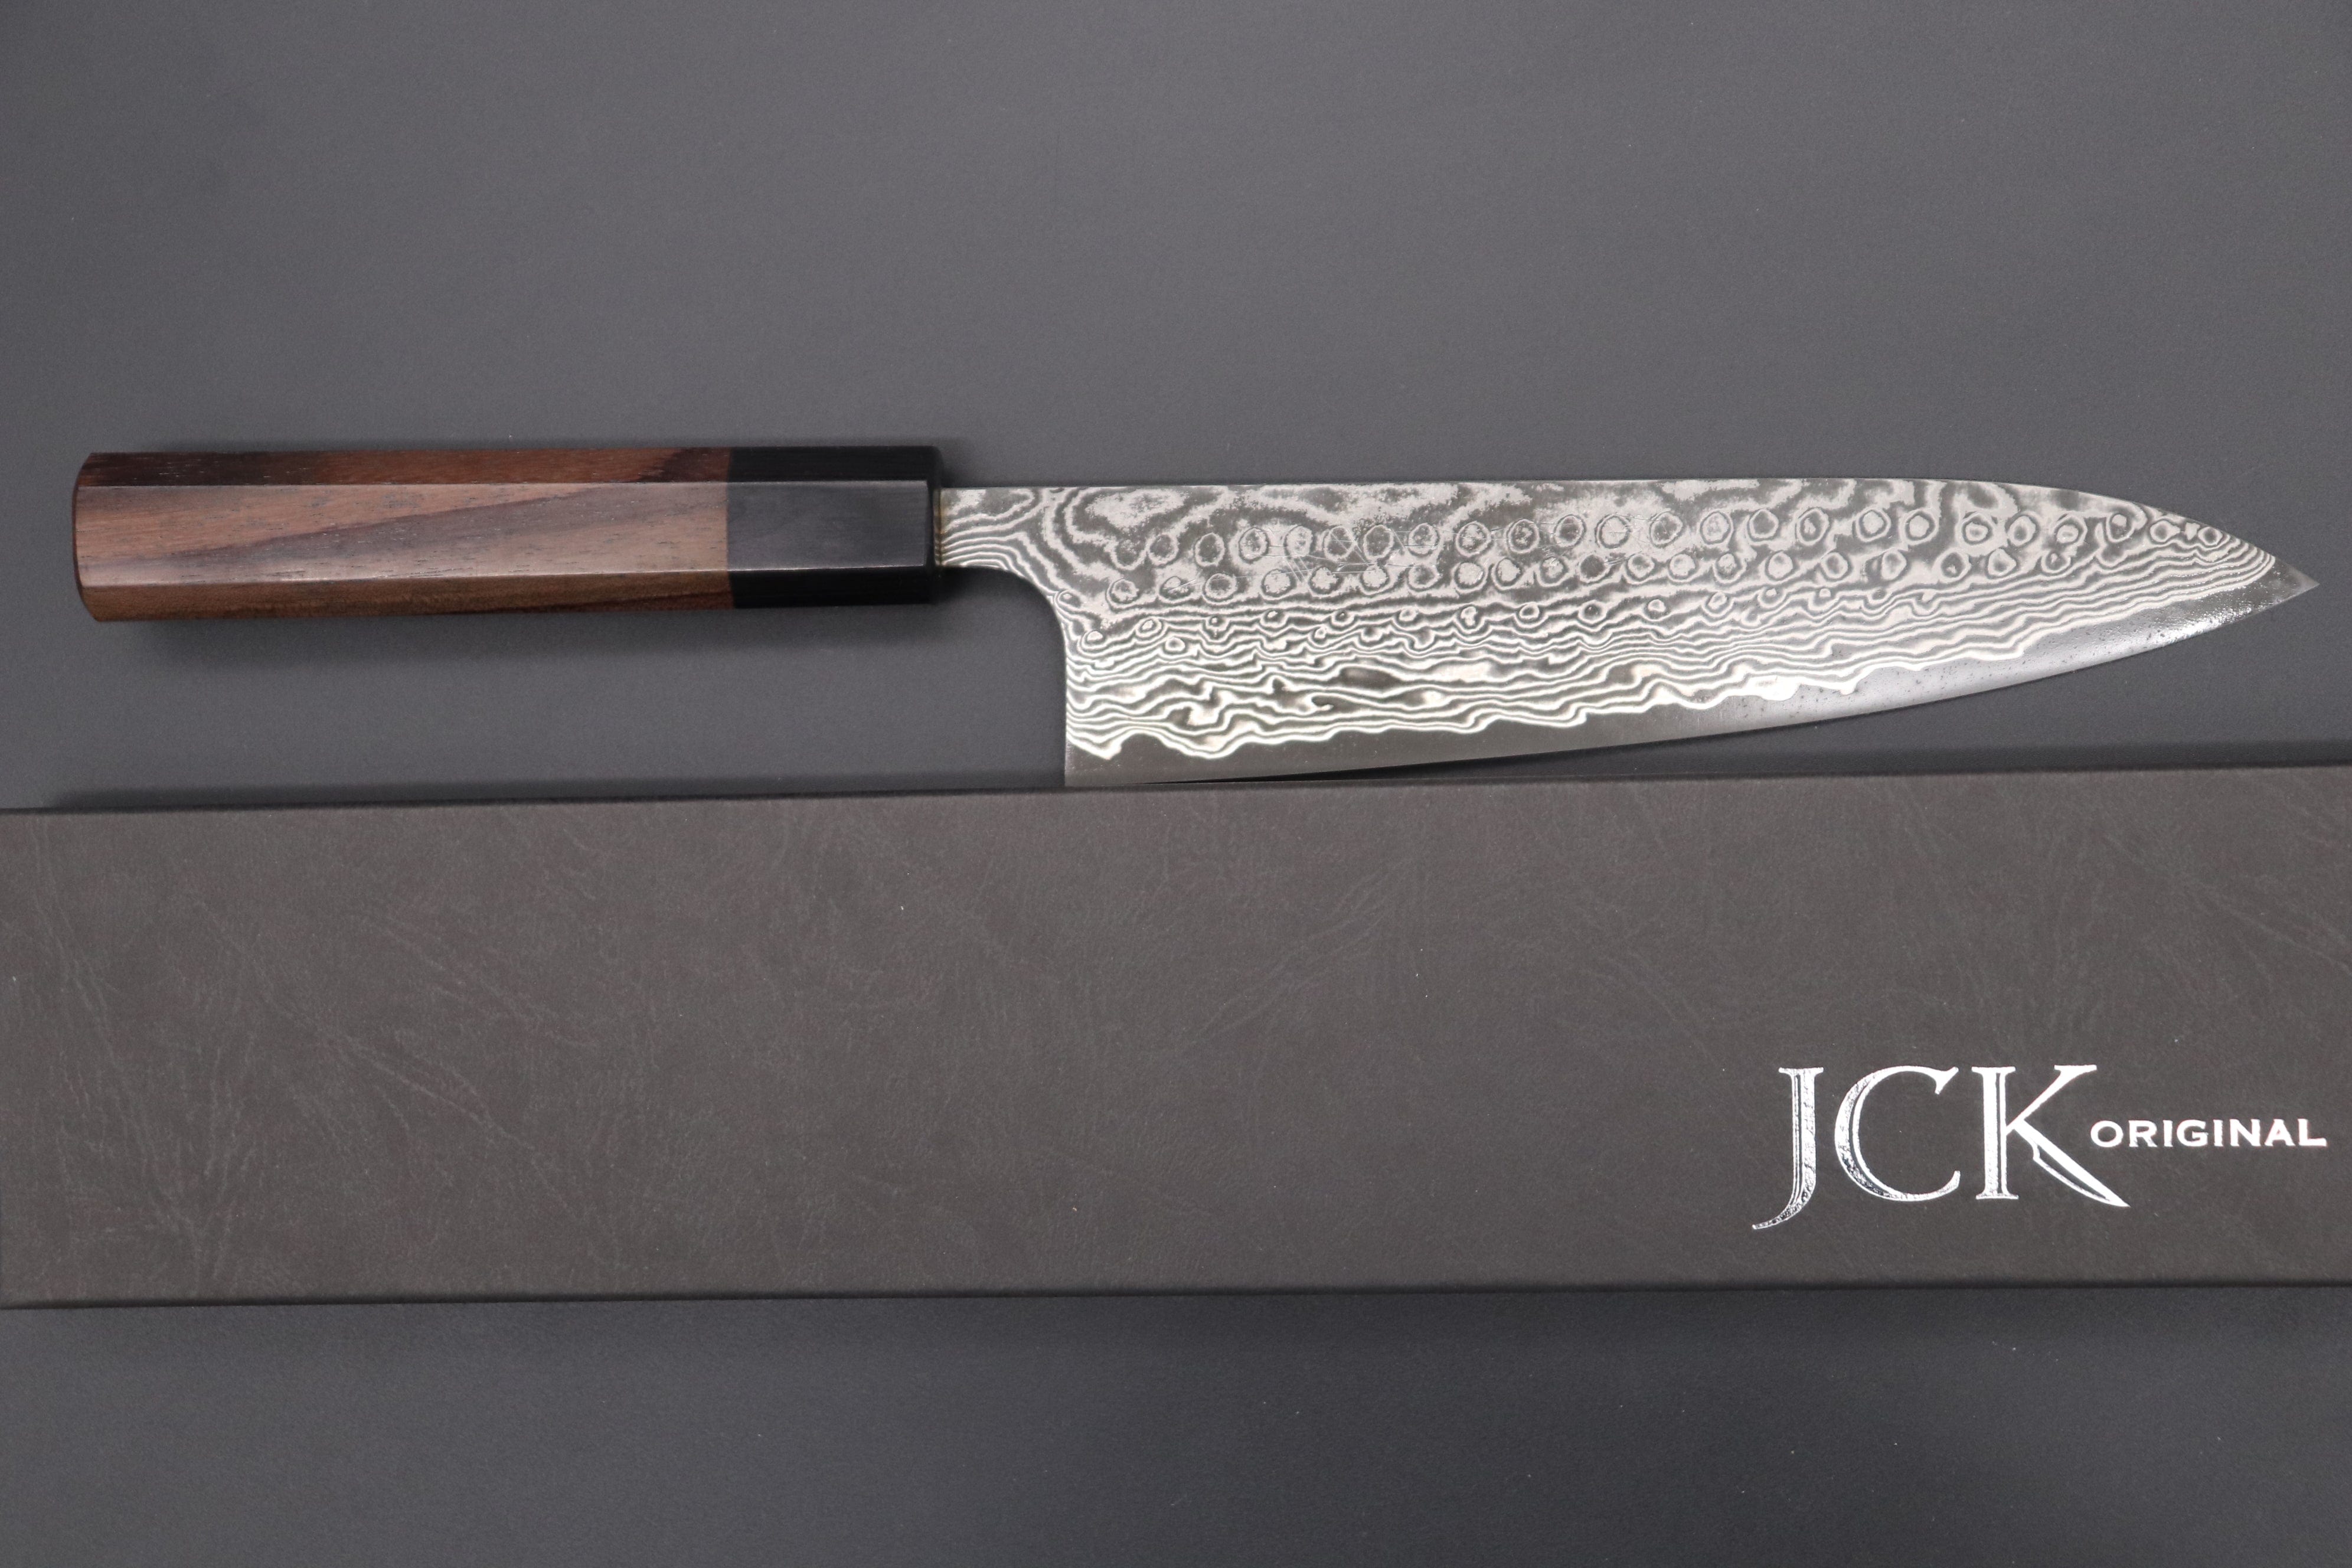 Ginza Steel - Original Kaito Damascus Steel Skinner knife 4 inch blade